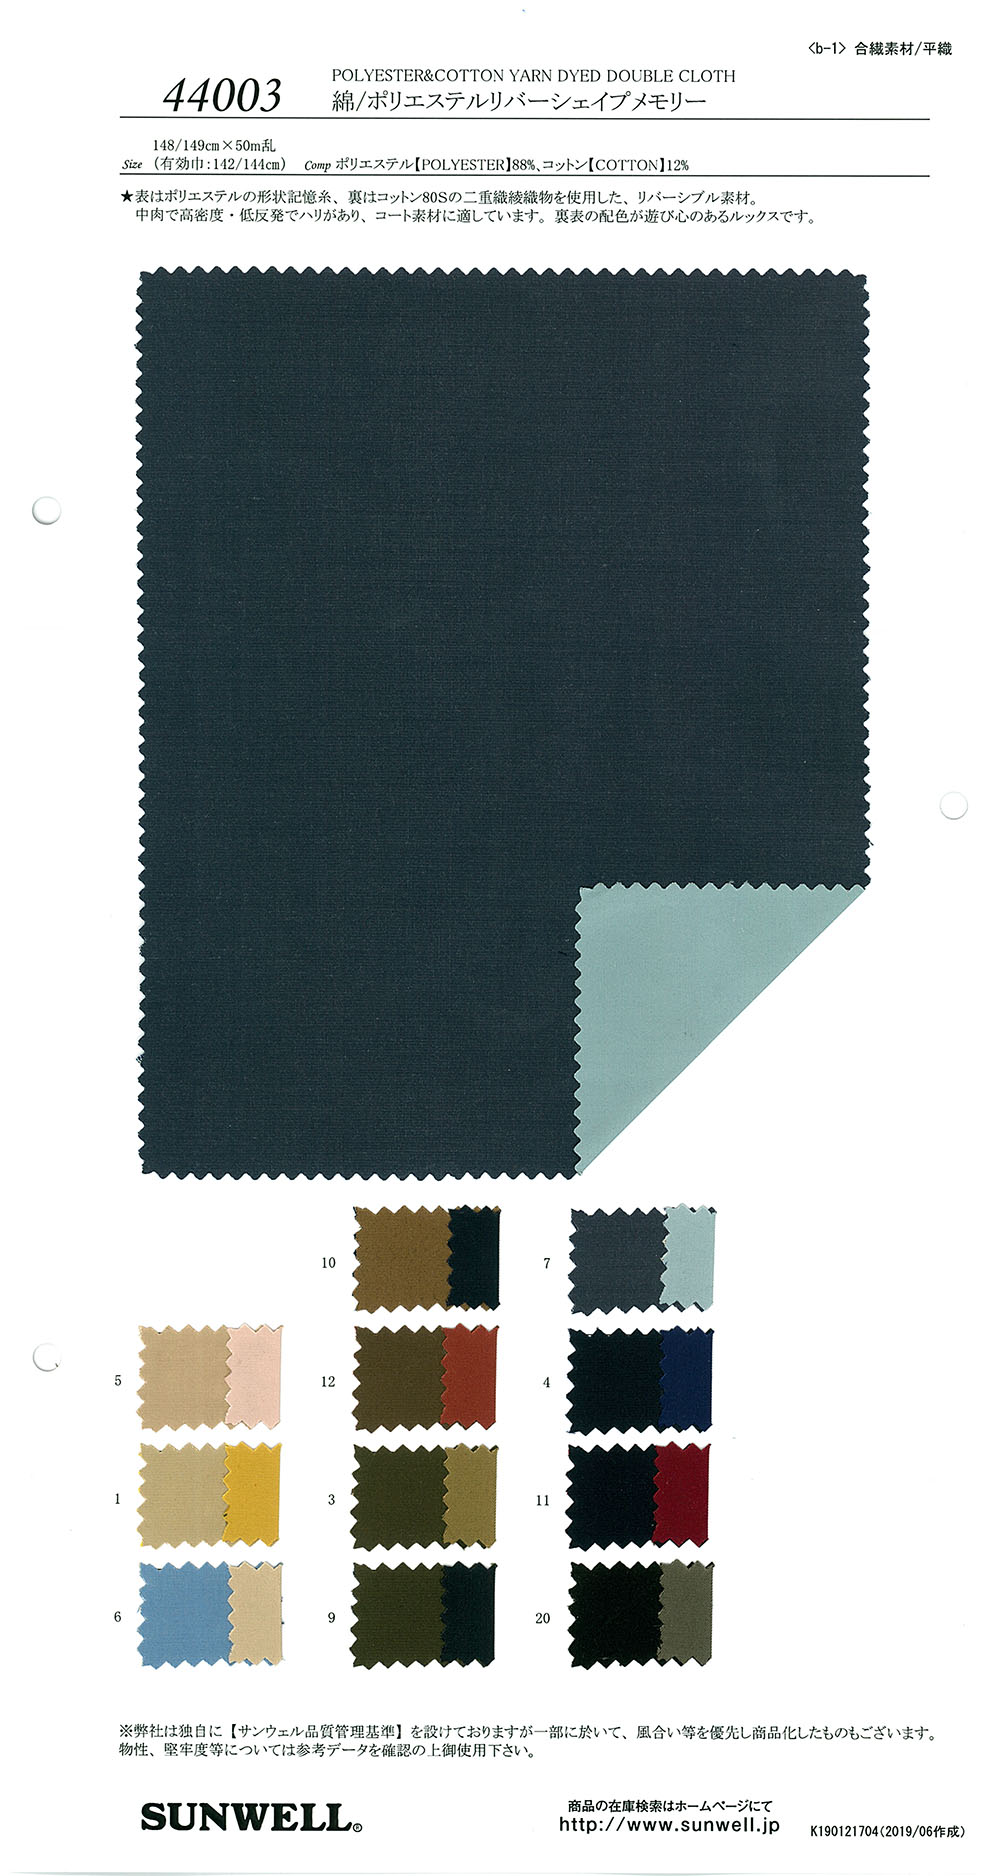 44003 Mémoire De Forme En Coton/polyester River[Fabrication De Textile] SUNWELL